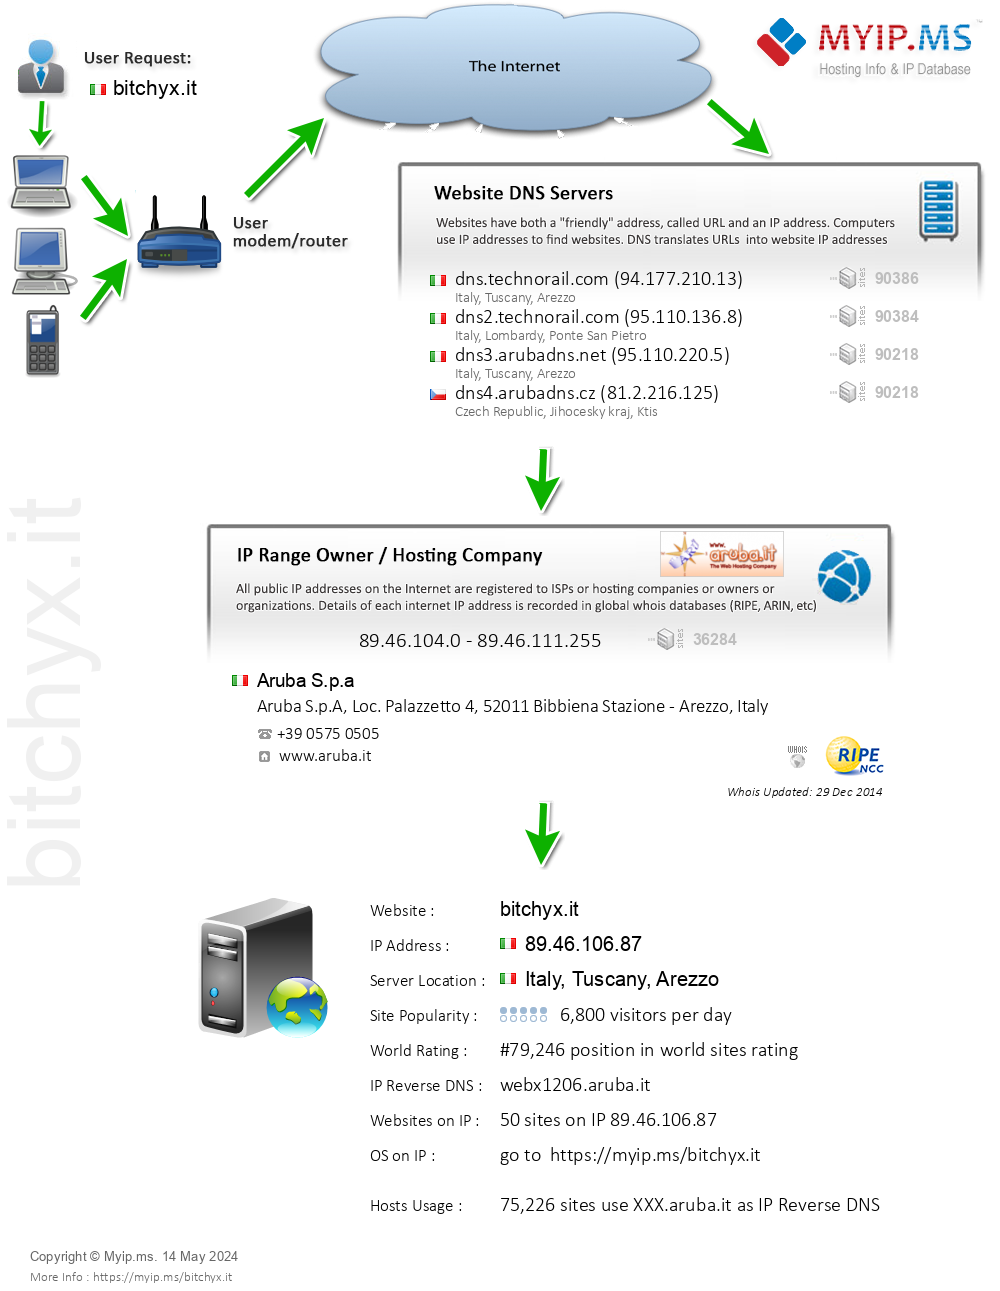 Bitchyx.it - Website Hosting Visual IP Diagram